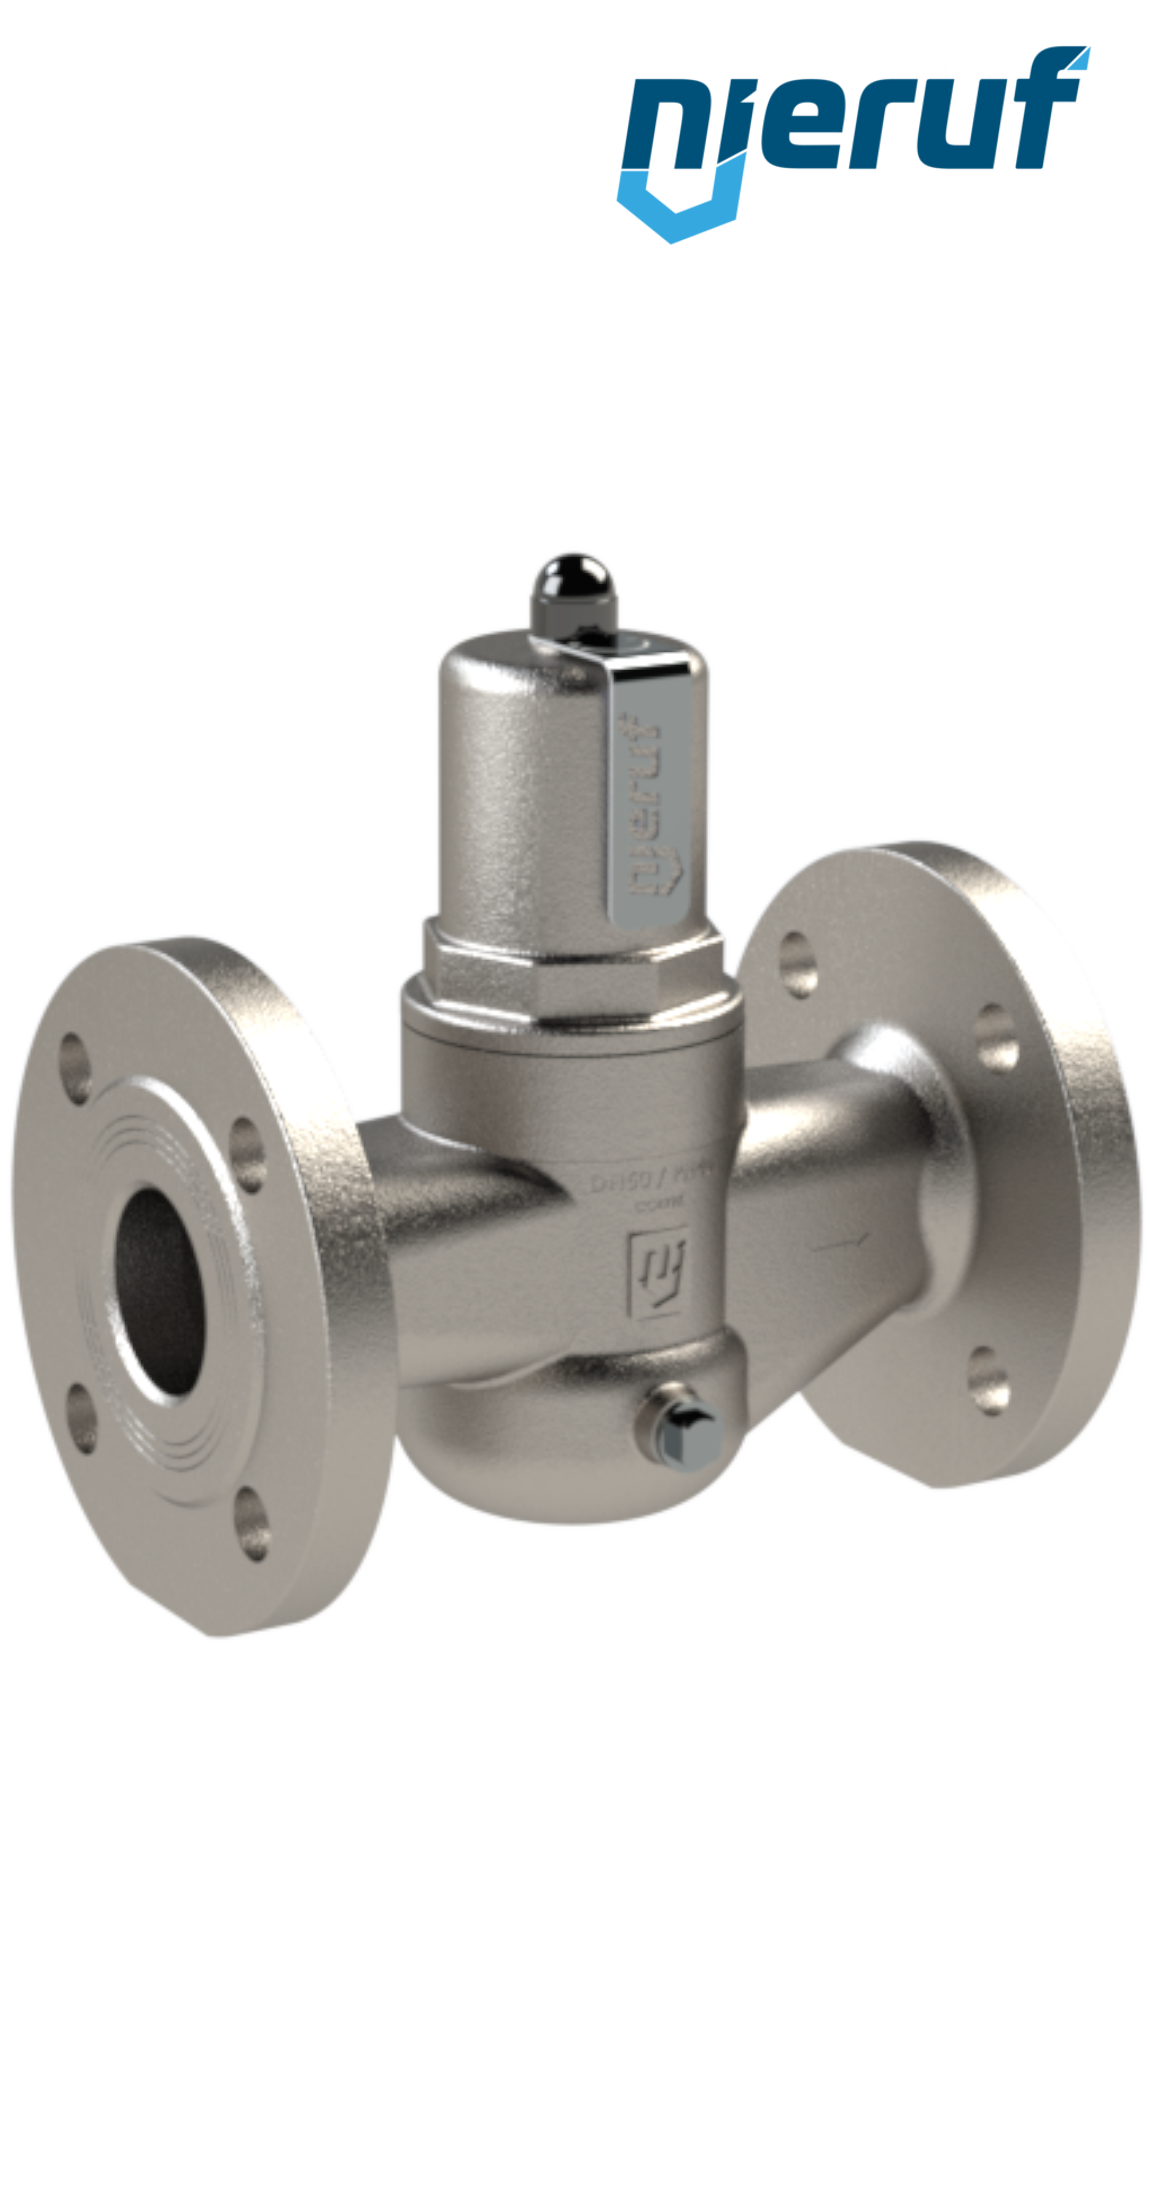 Flange-pressure reducing valve DN 20 PN40 DM08 stainless steel FKM 1.0 - 8.0 bar